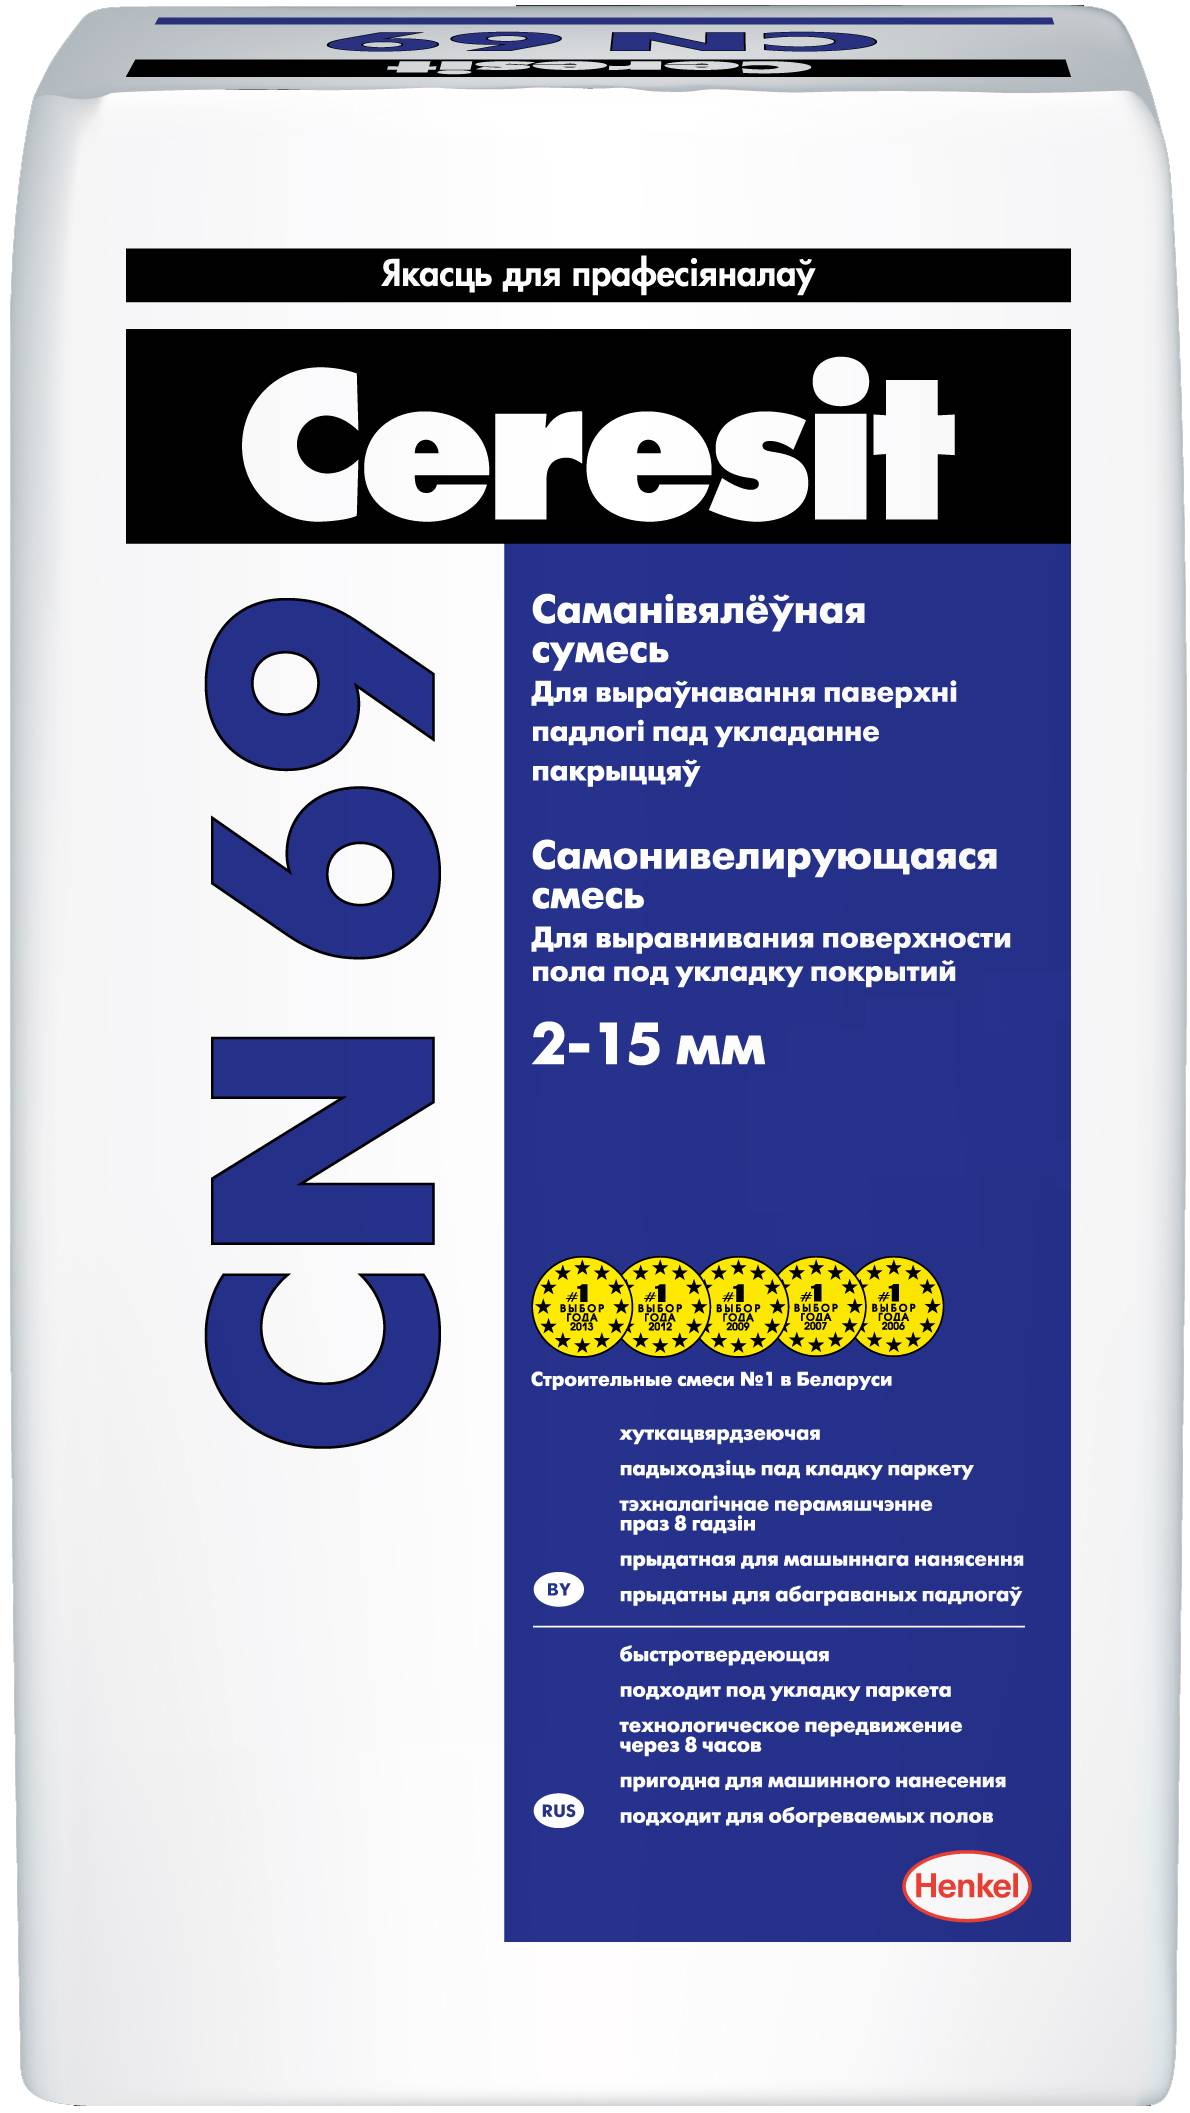 Ceresit cn 175 (церезит): наливной пол, расход на 1м2, технические характеристики, инструкция